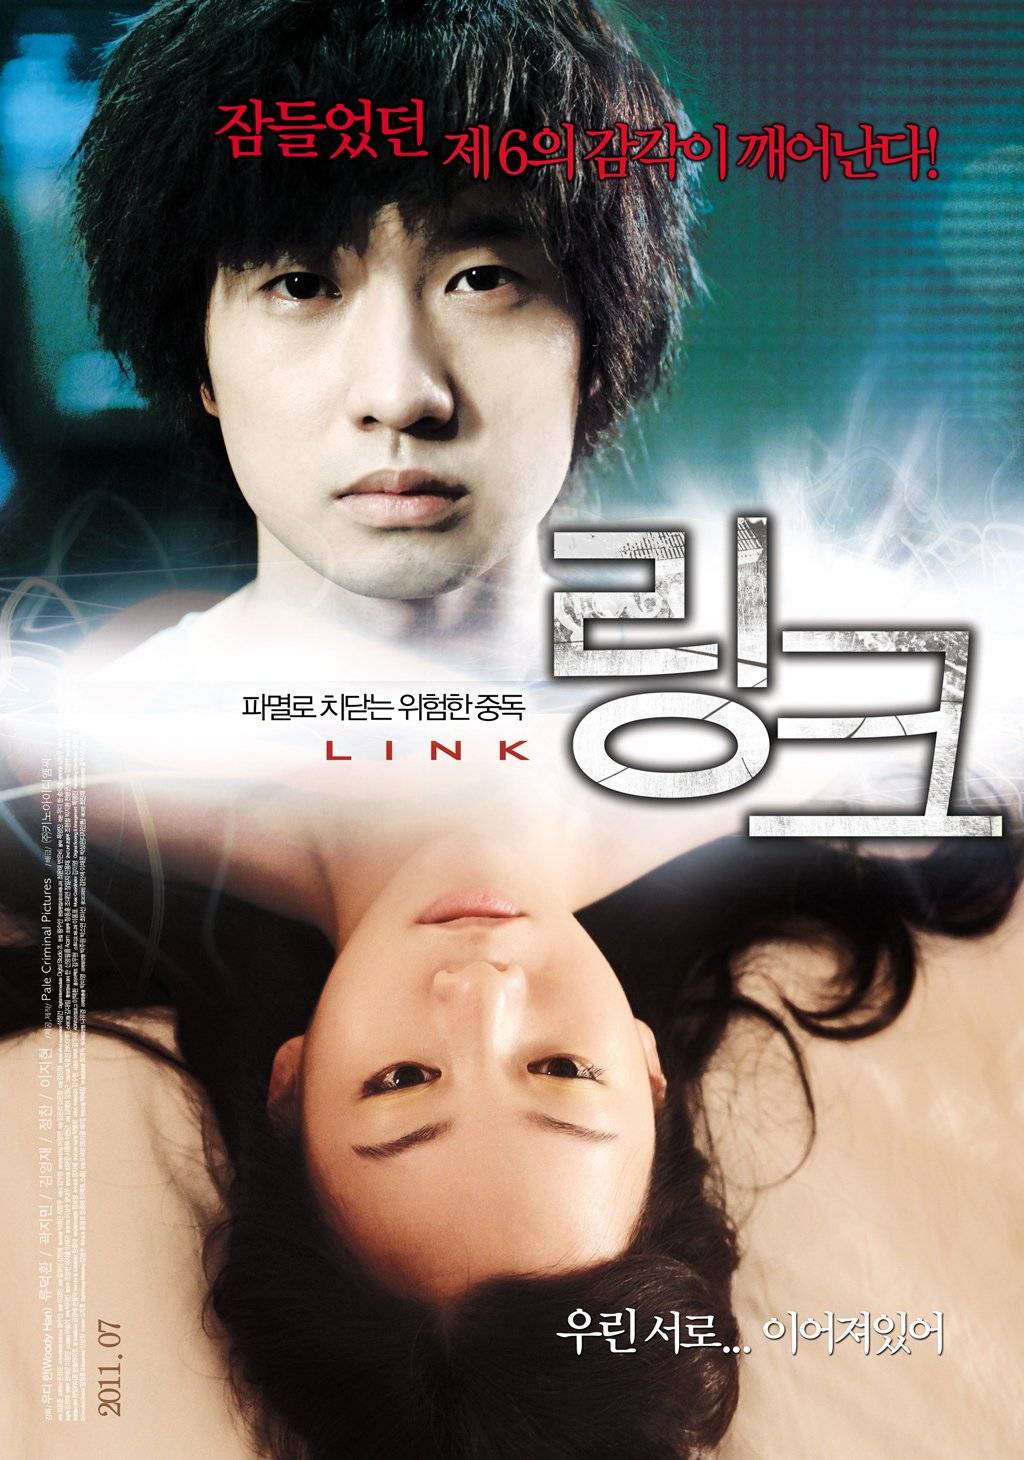 Korean movies opening today 2011/07/28 in Korea HanCinema The